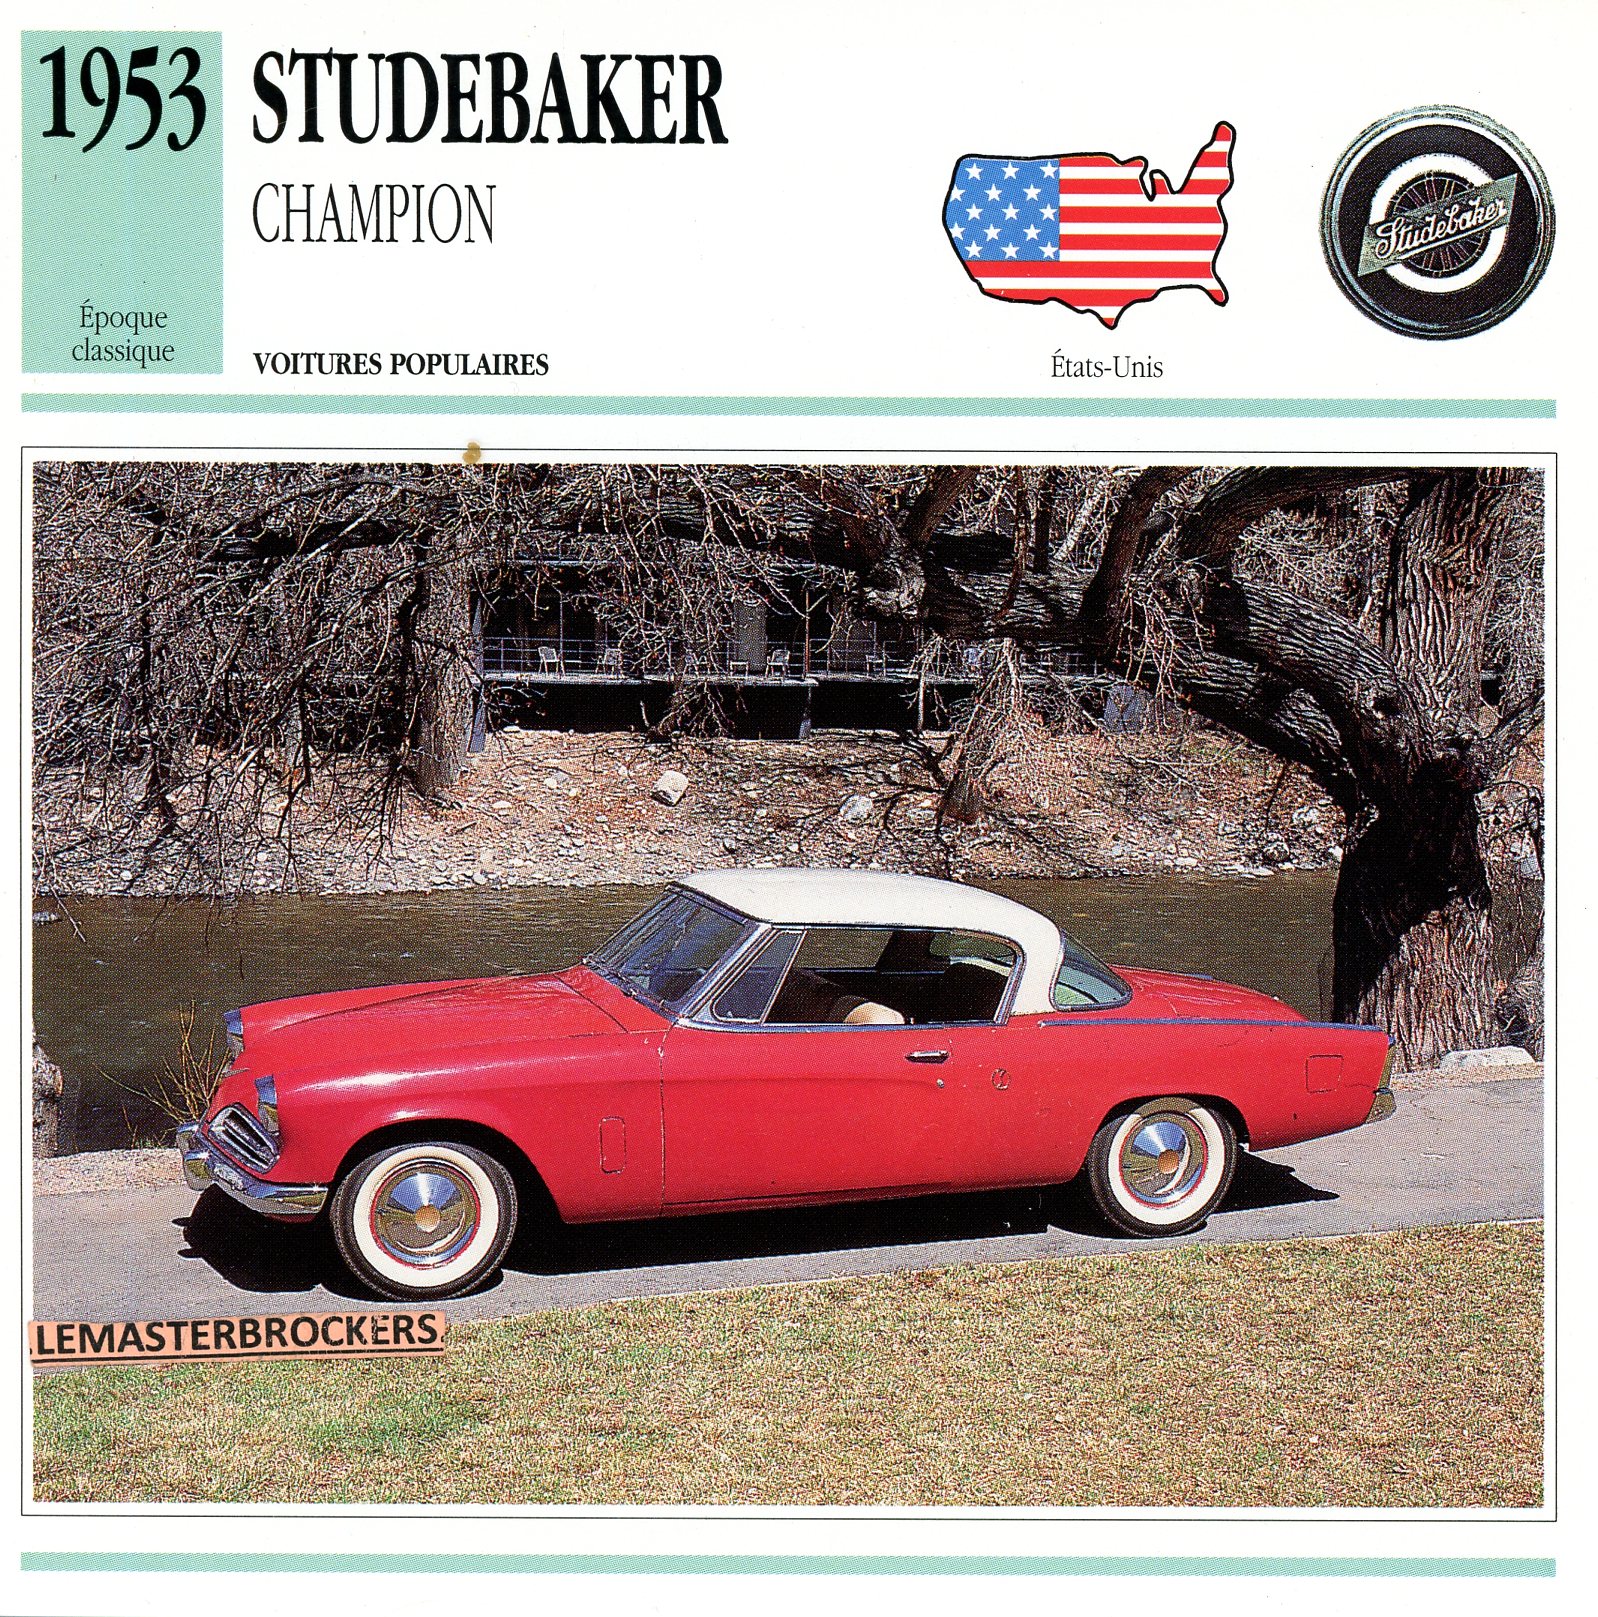 STUDEBAKER-CHAMPION-1953-LEMASTERBROCKERS-CARS-CARD-FICHE-AUTO